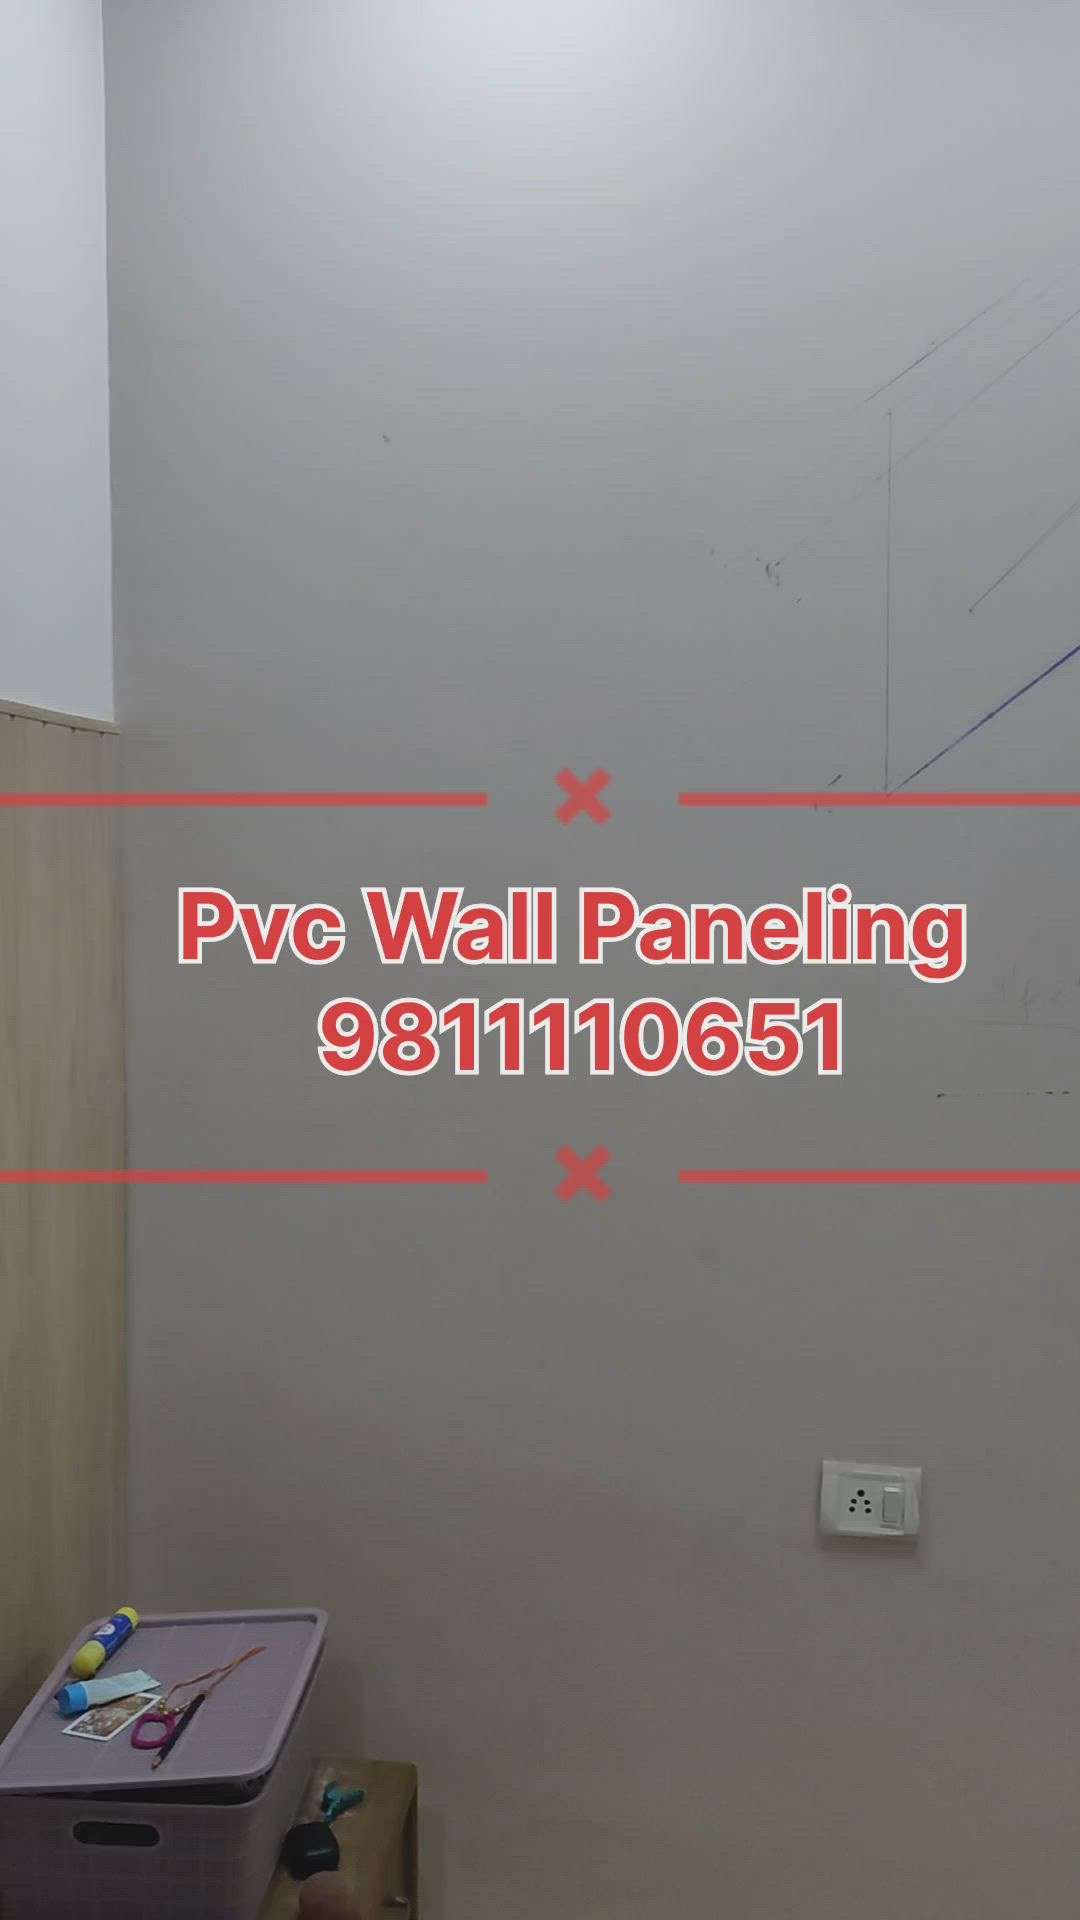 pvc Paneling 9811110651  #PVCFalseCeiling #Pvc #Pvcpanel #WallDecors #WallDecors #WallPainting #LivingRoomWallPaper